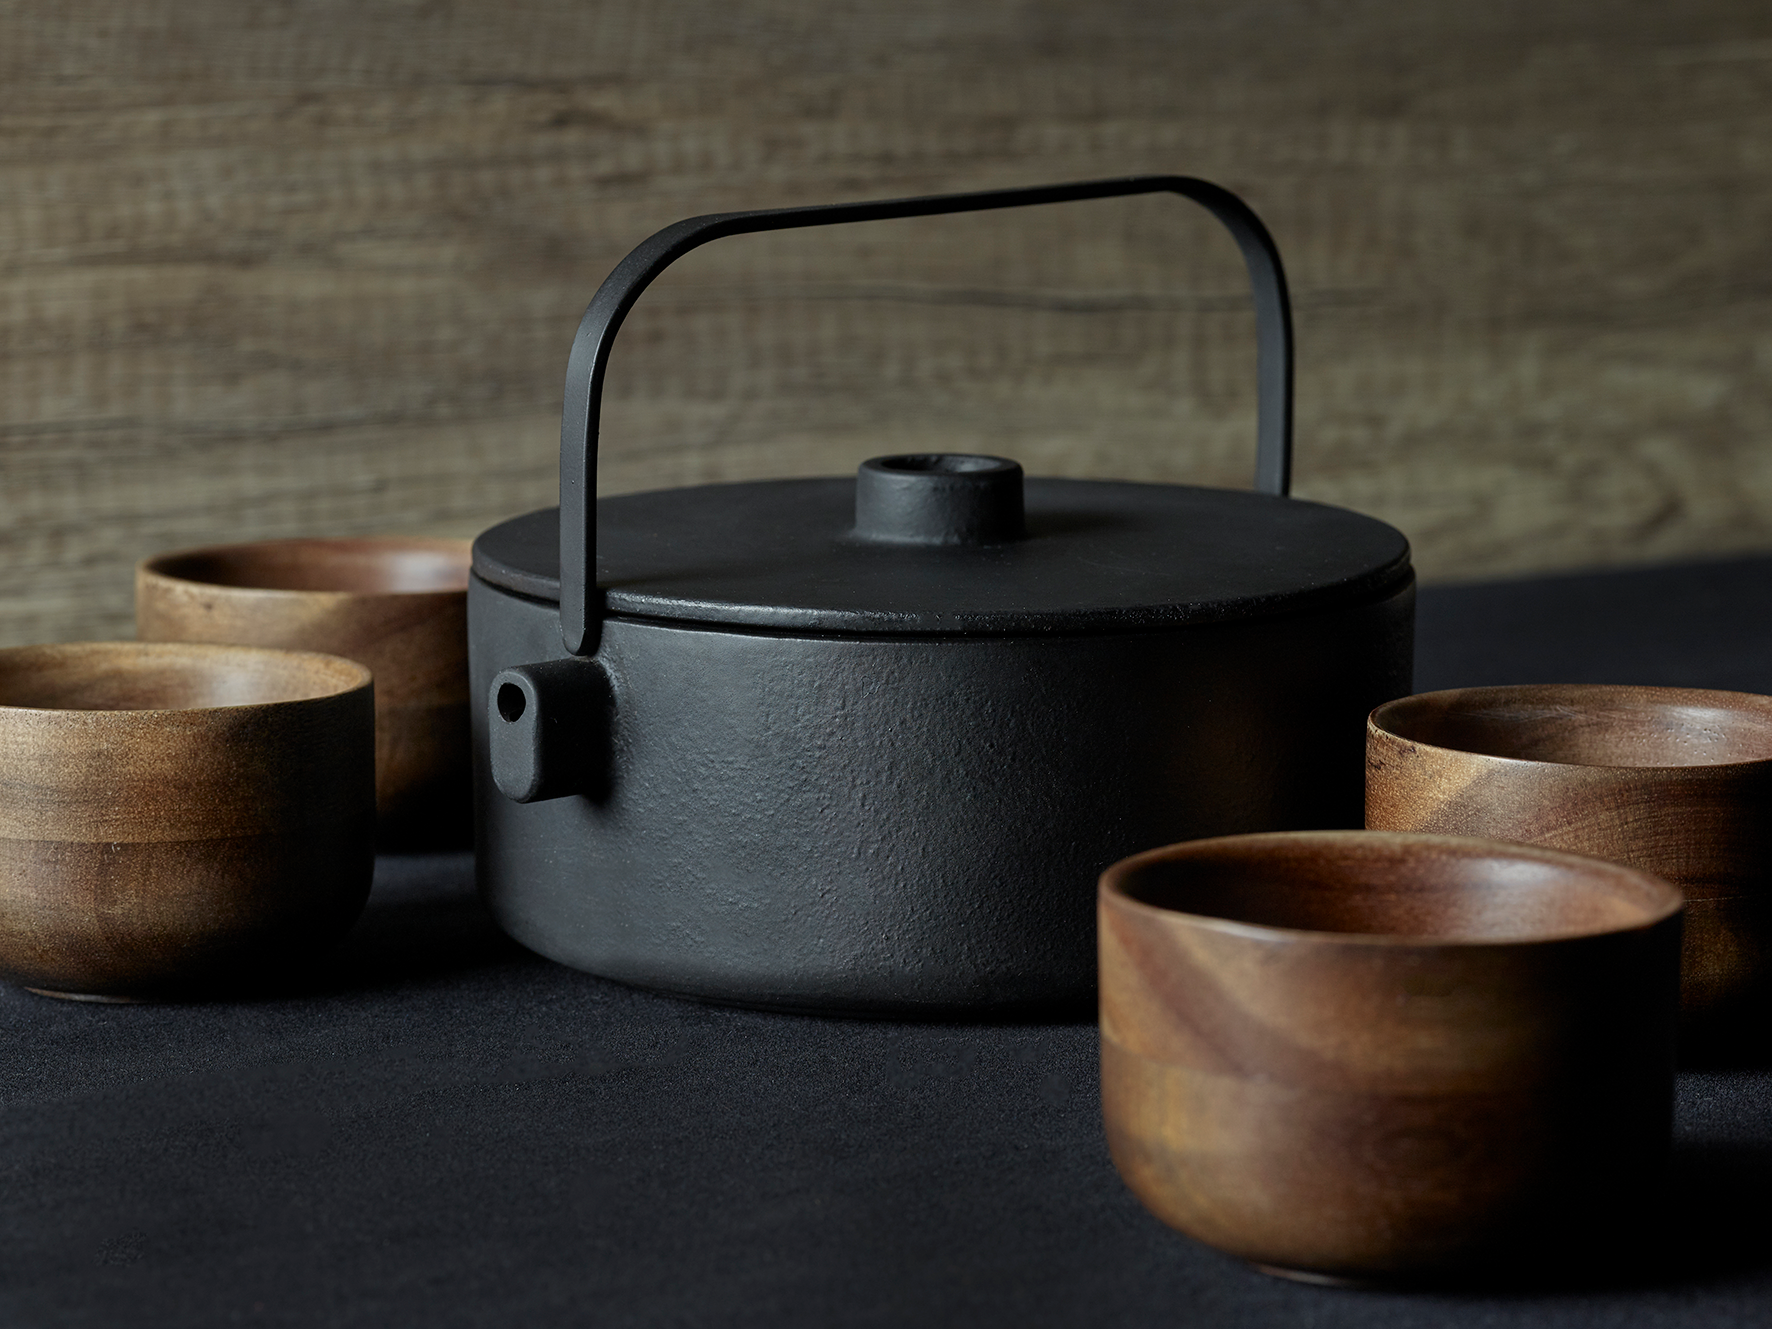 Cast-iron teapot - Collage